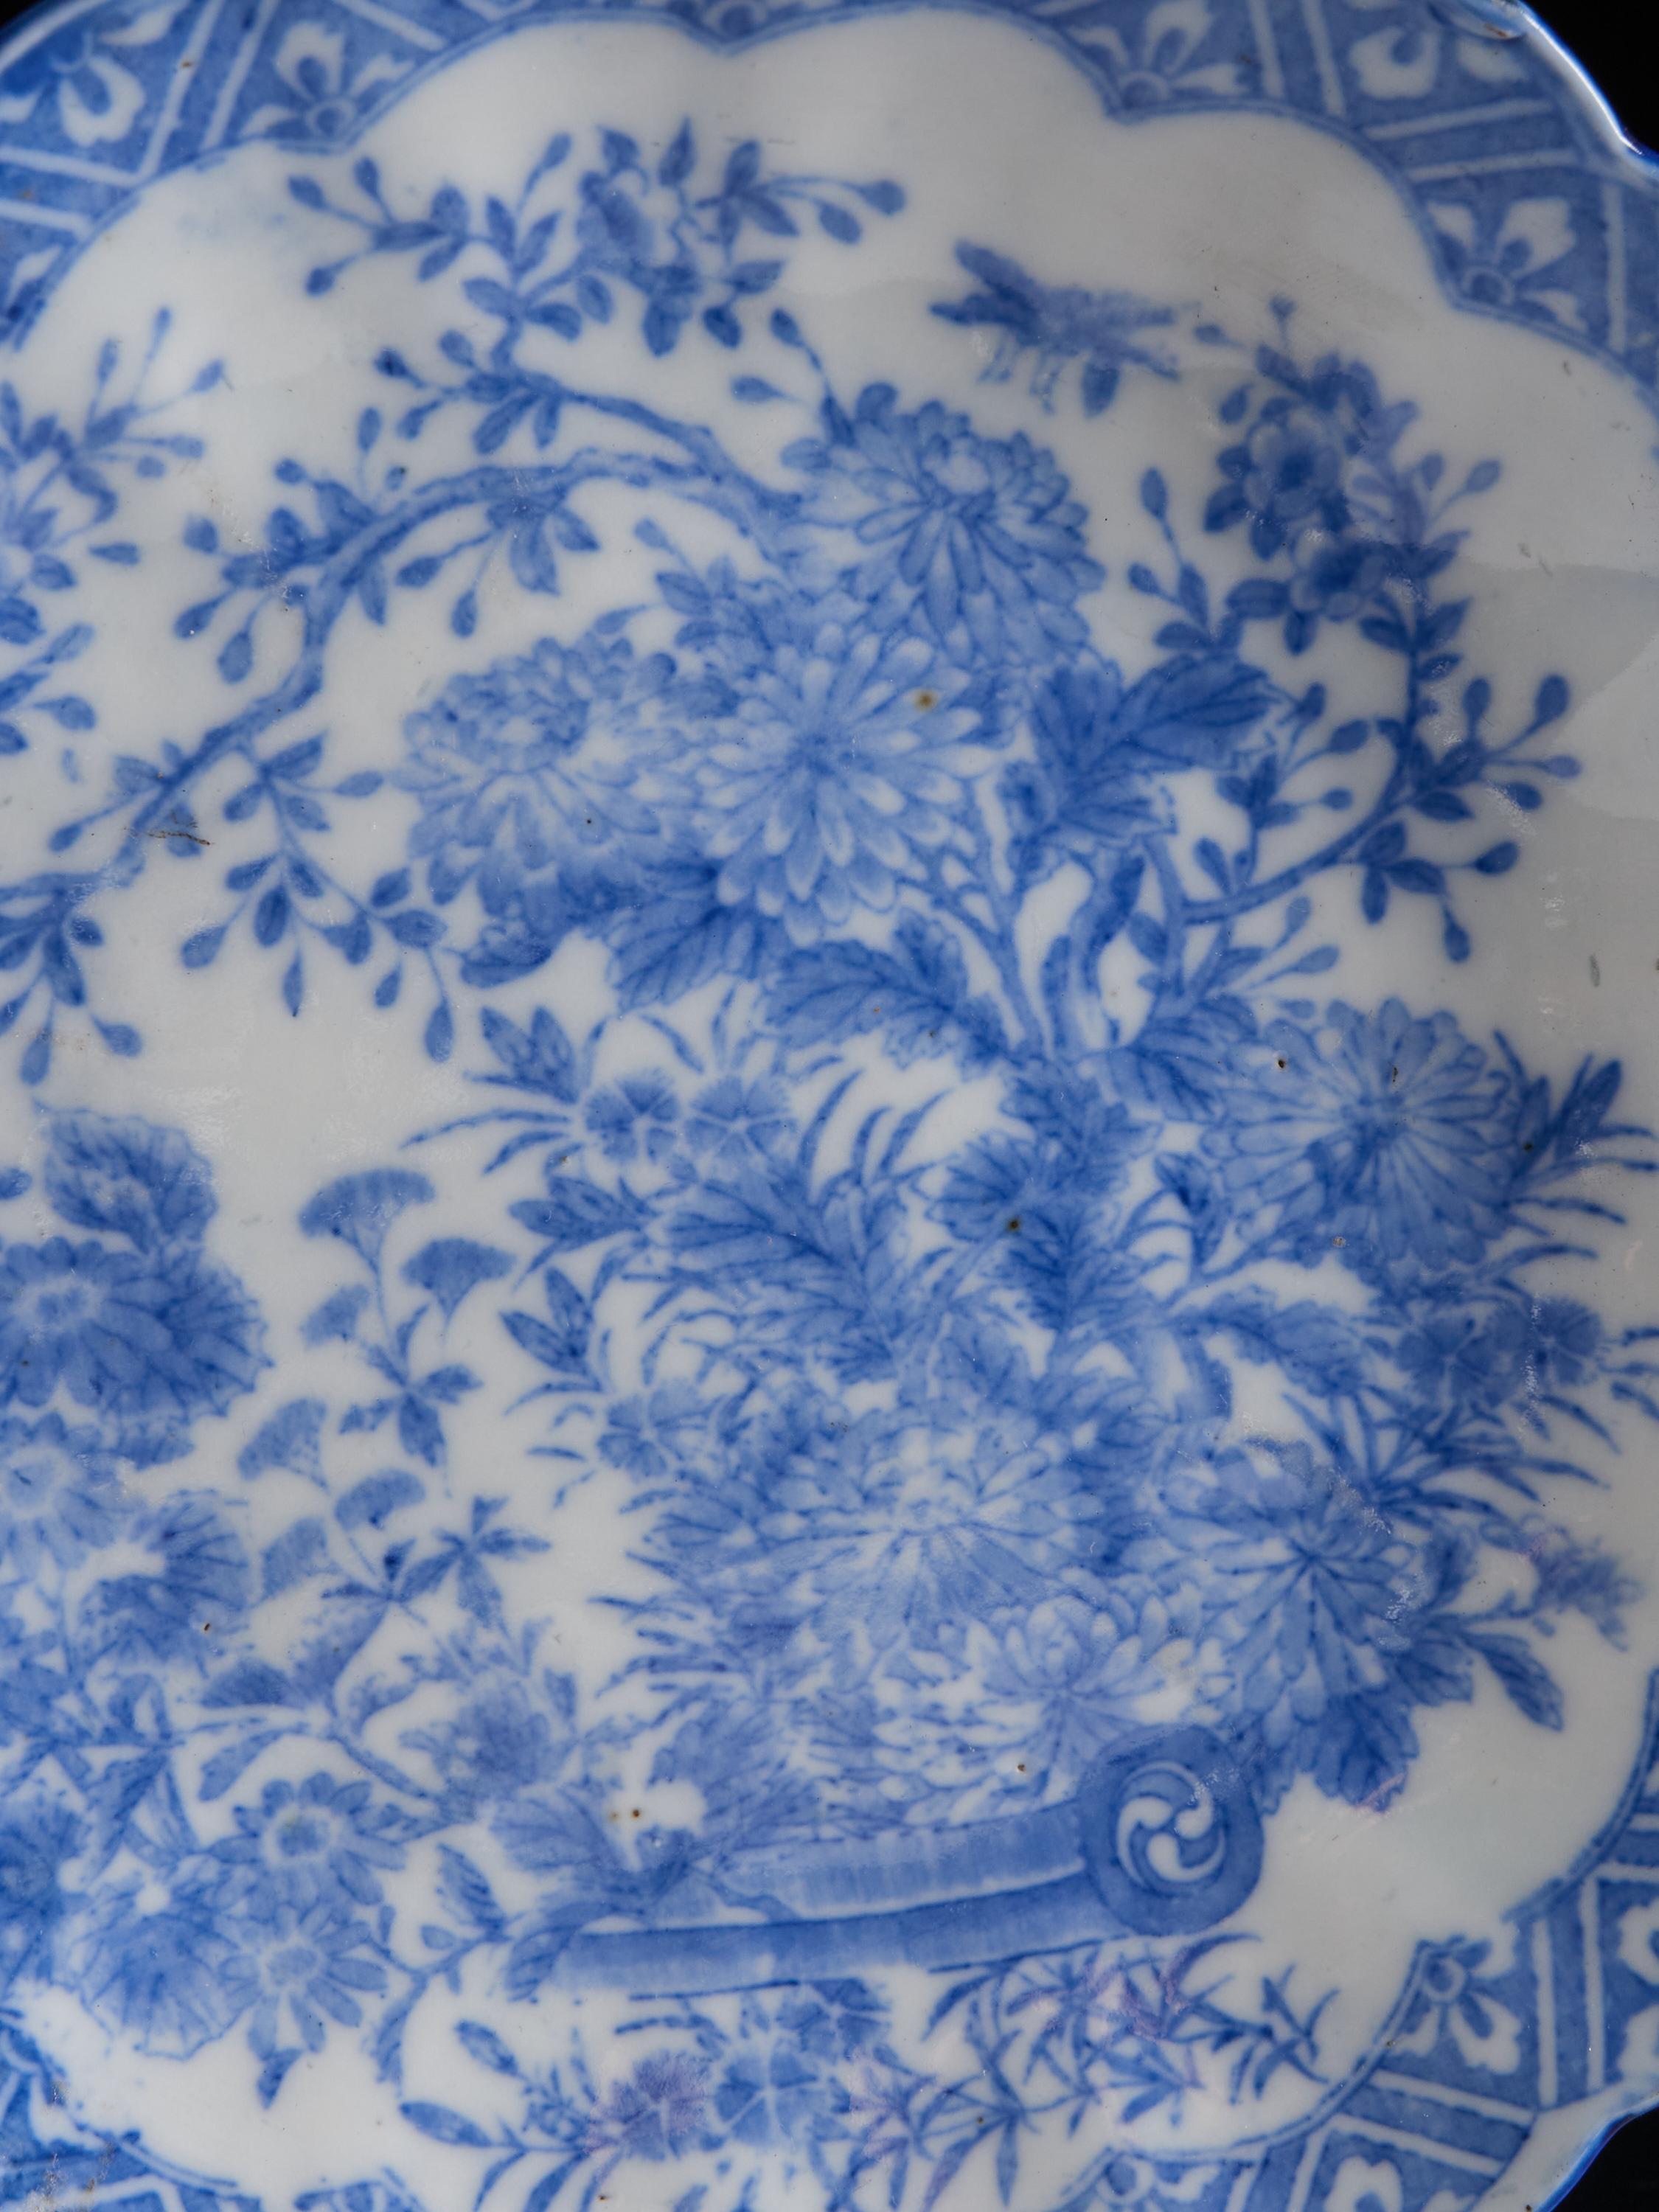 19th Century Stunning Set of 3 White Ceramic Plates with Ornate Indigo Blue Designs